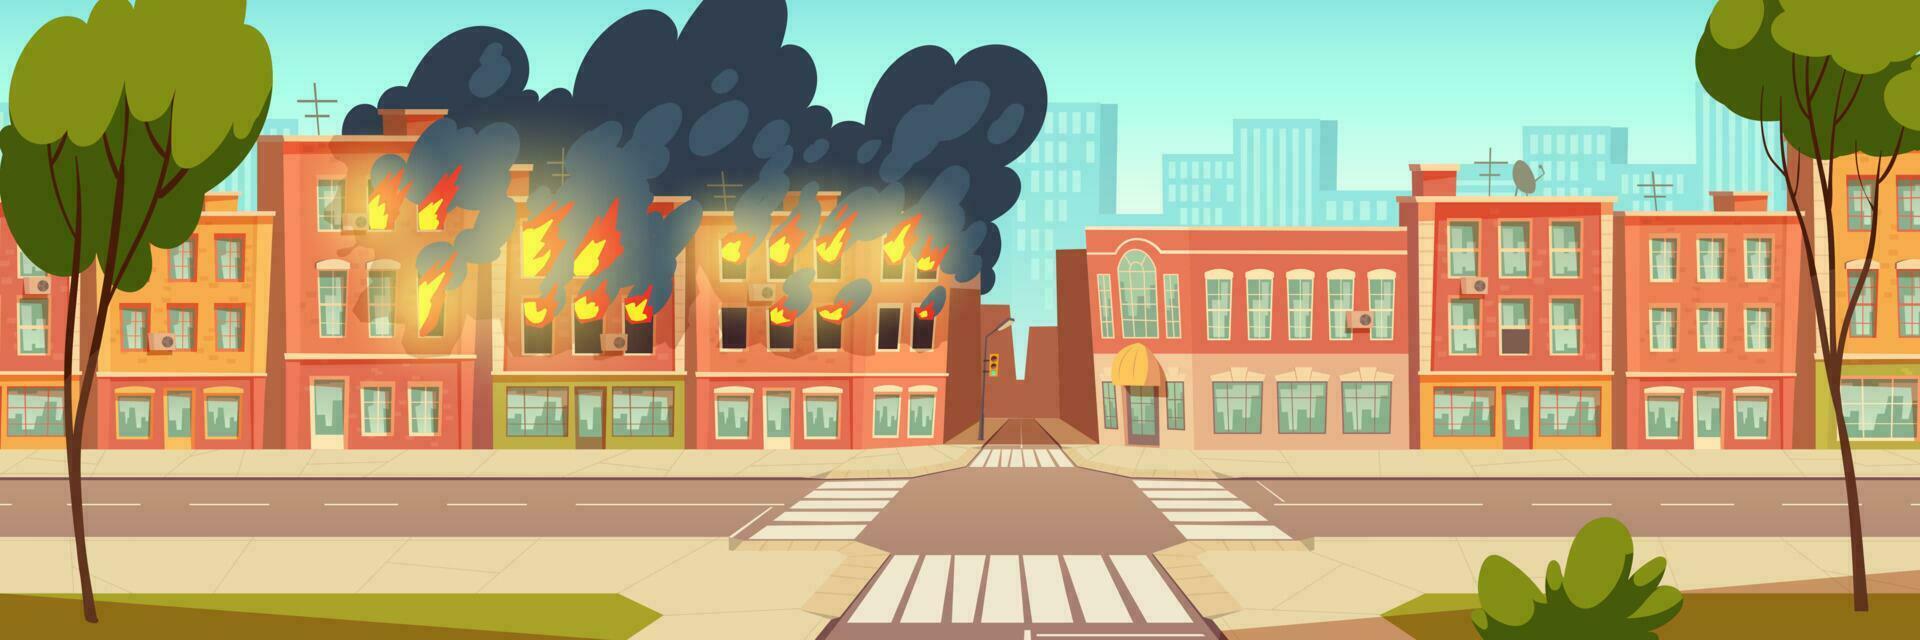 fire-in-city-house-burning-building-cartoon-free-vector.jpg